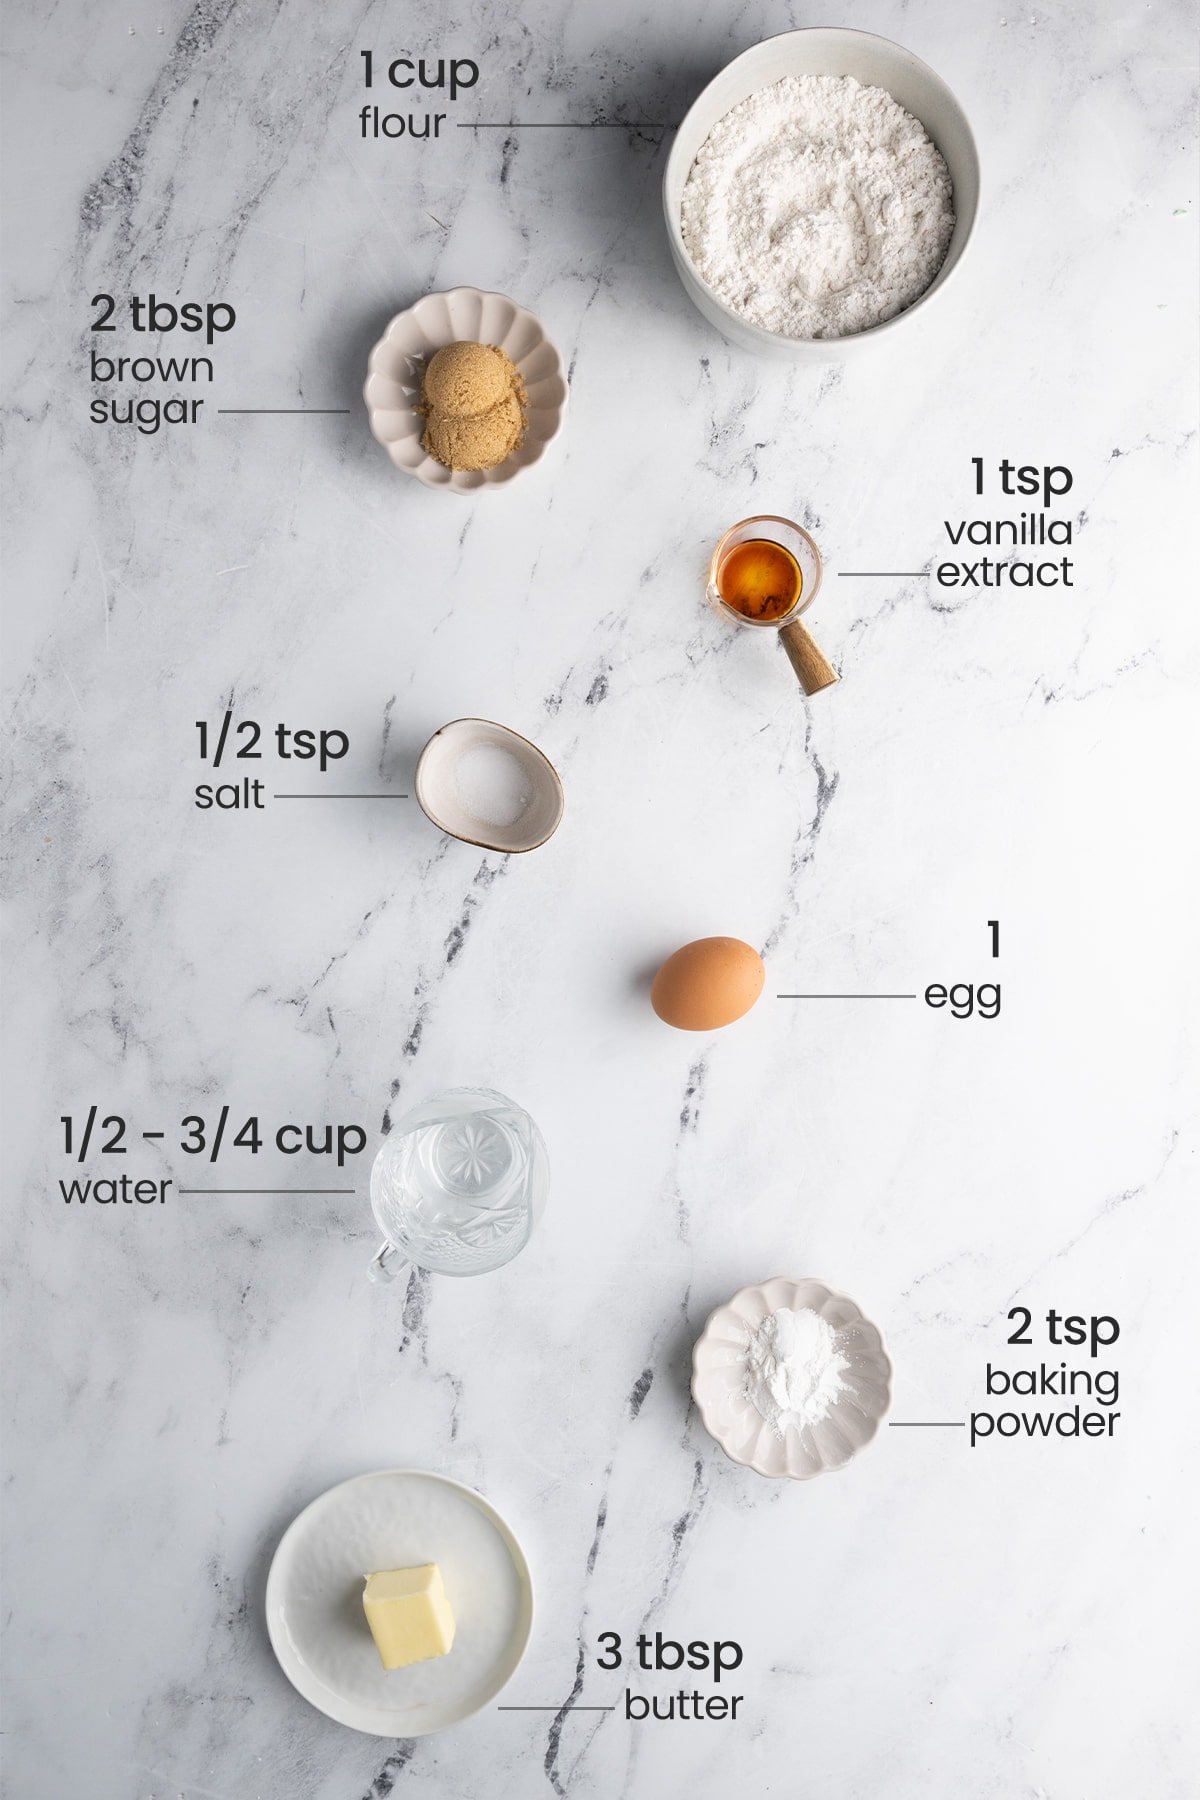 ingredients for no milk pancakes - flour, brown sugar, vanilla extract, salt, egg, baking powder, water, butter